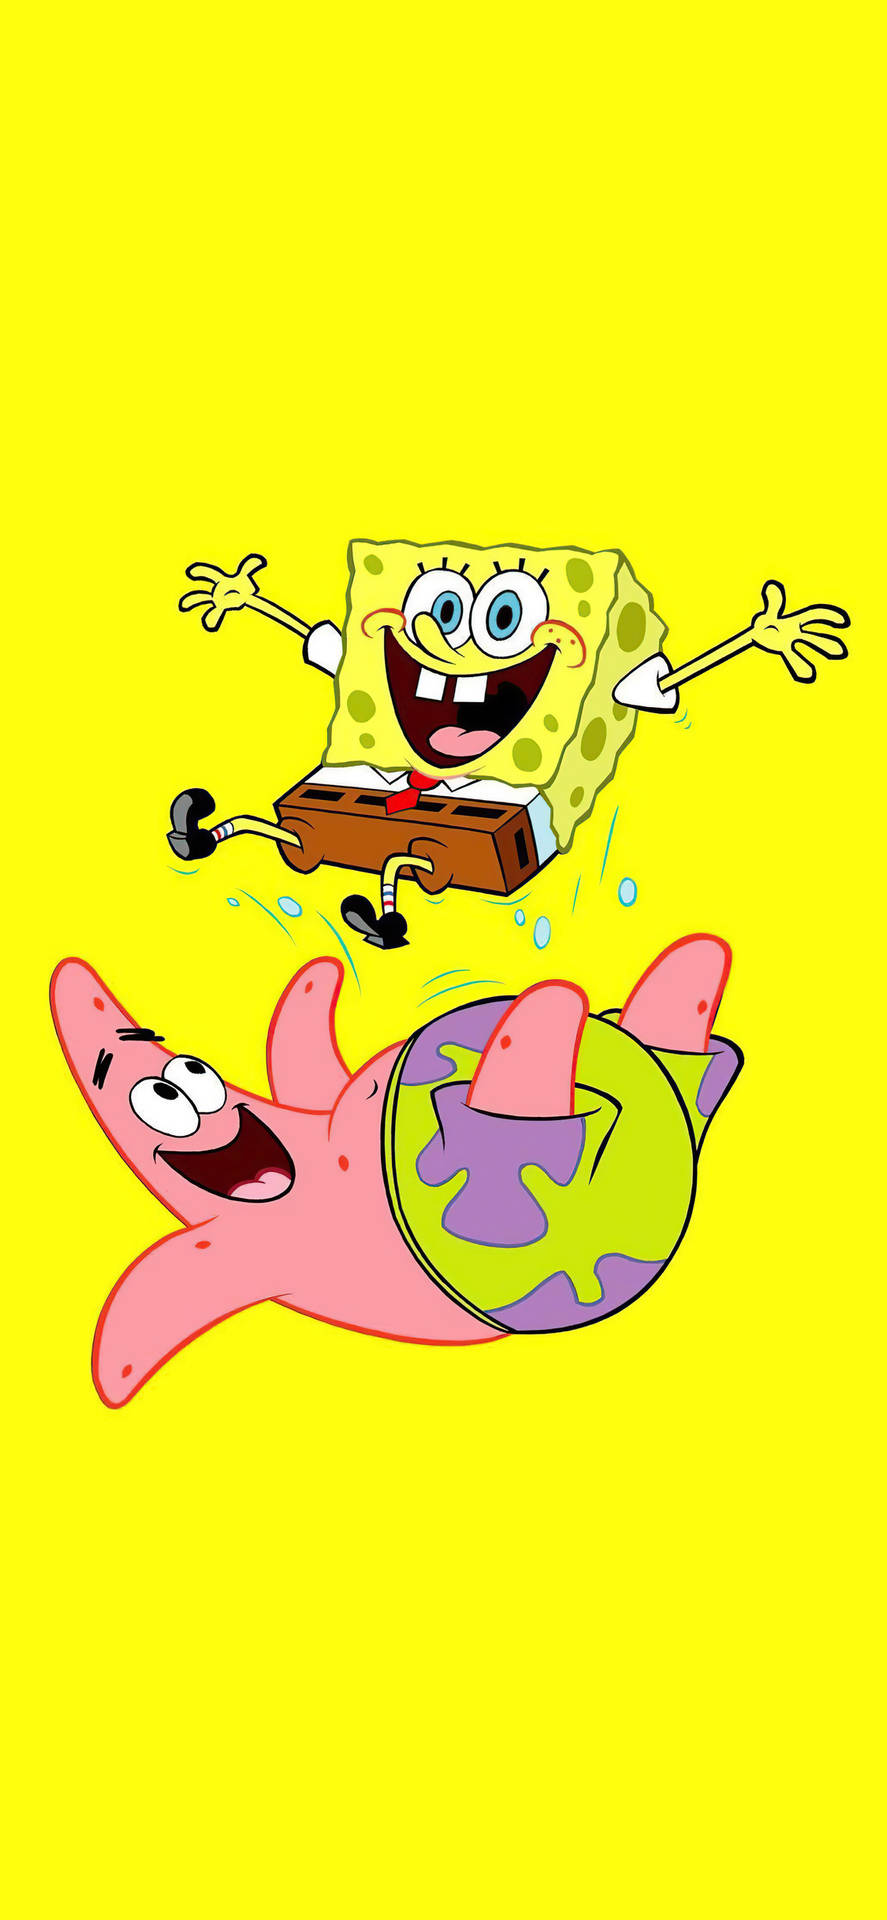 Download Spongebob Patrick iPhone X Cartoon Wallpaper | Wallpapers.com